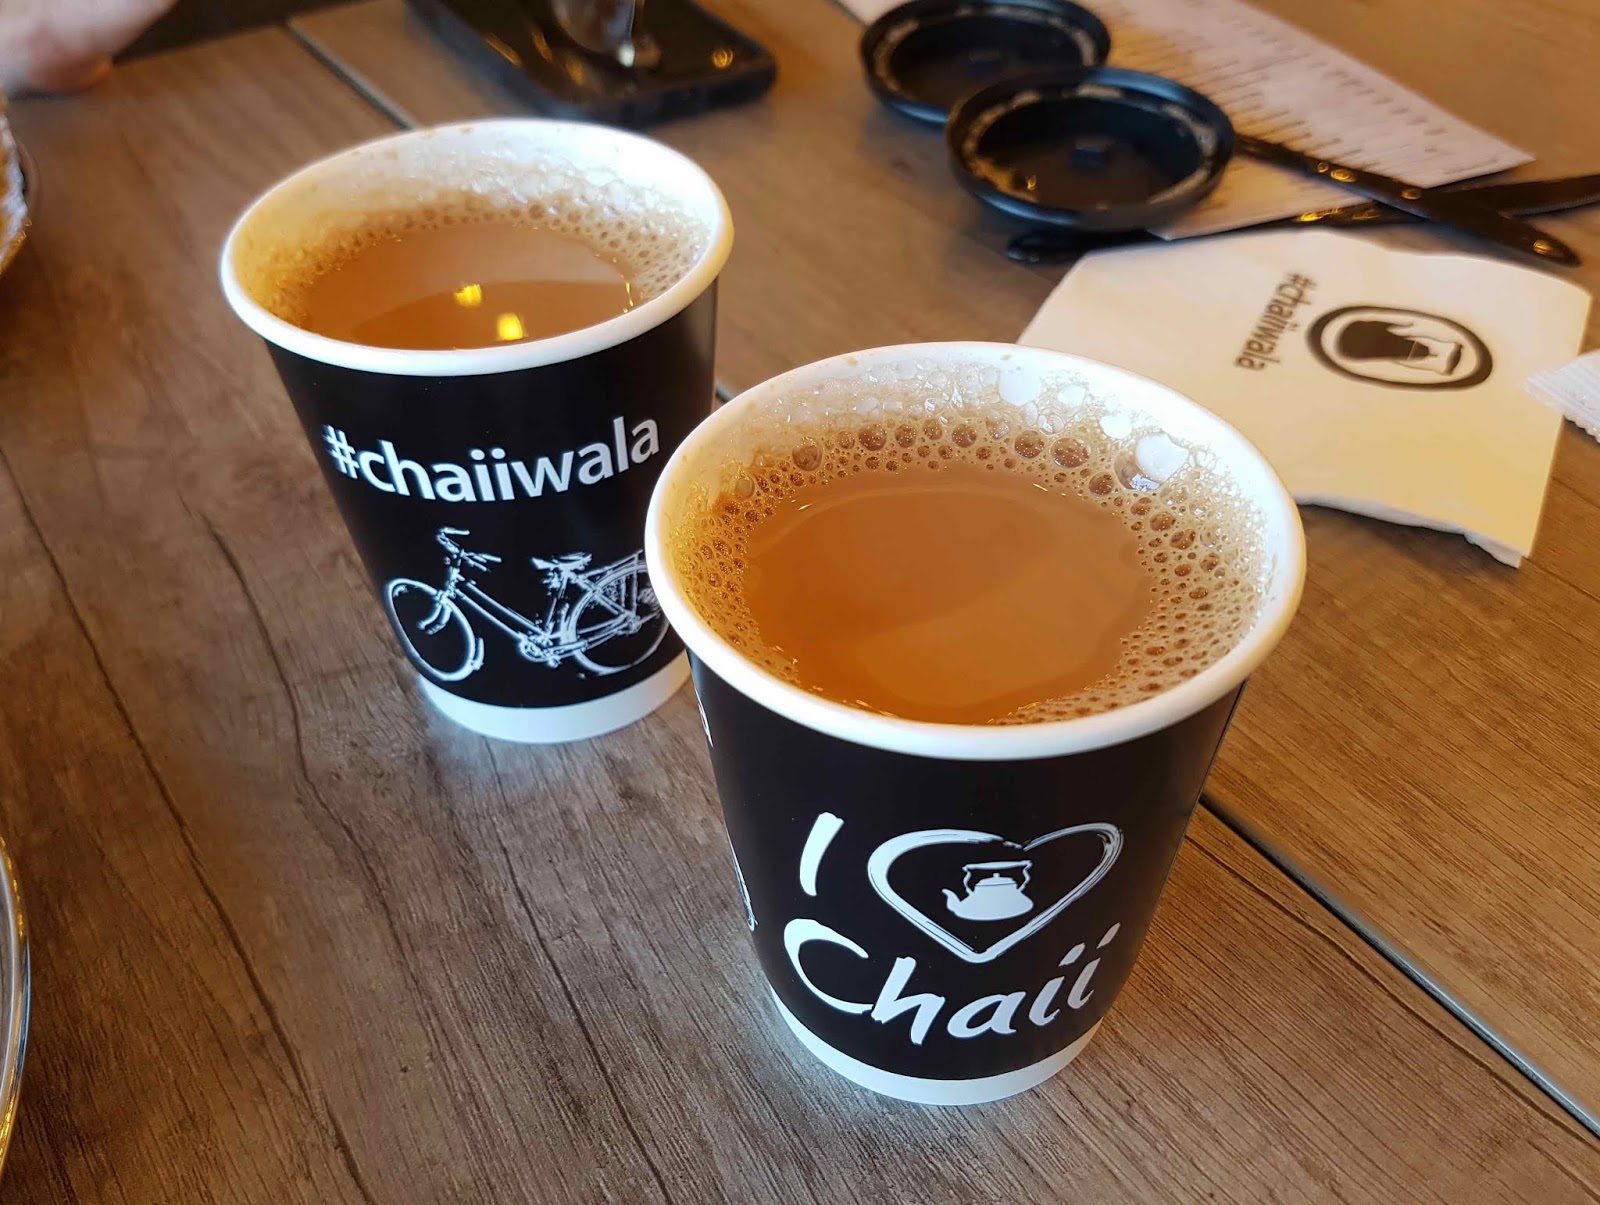 How Does Chaiiwala Make Their Karak Tea?